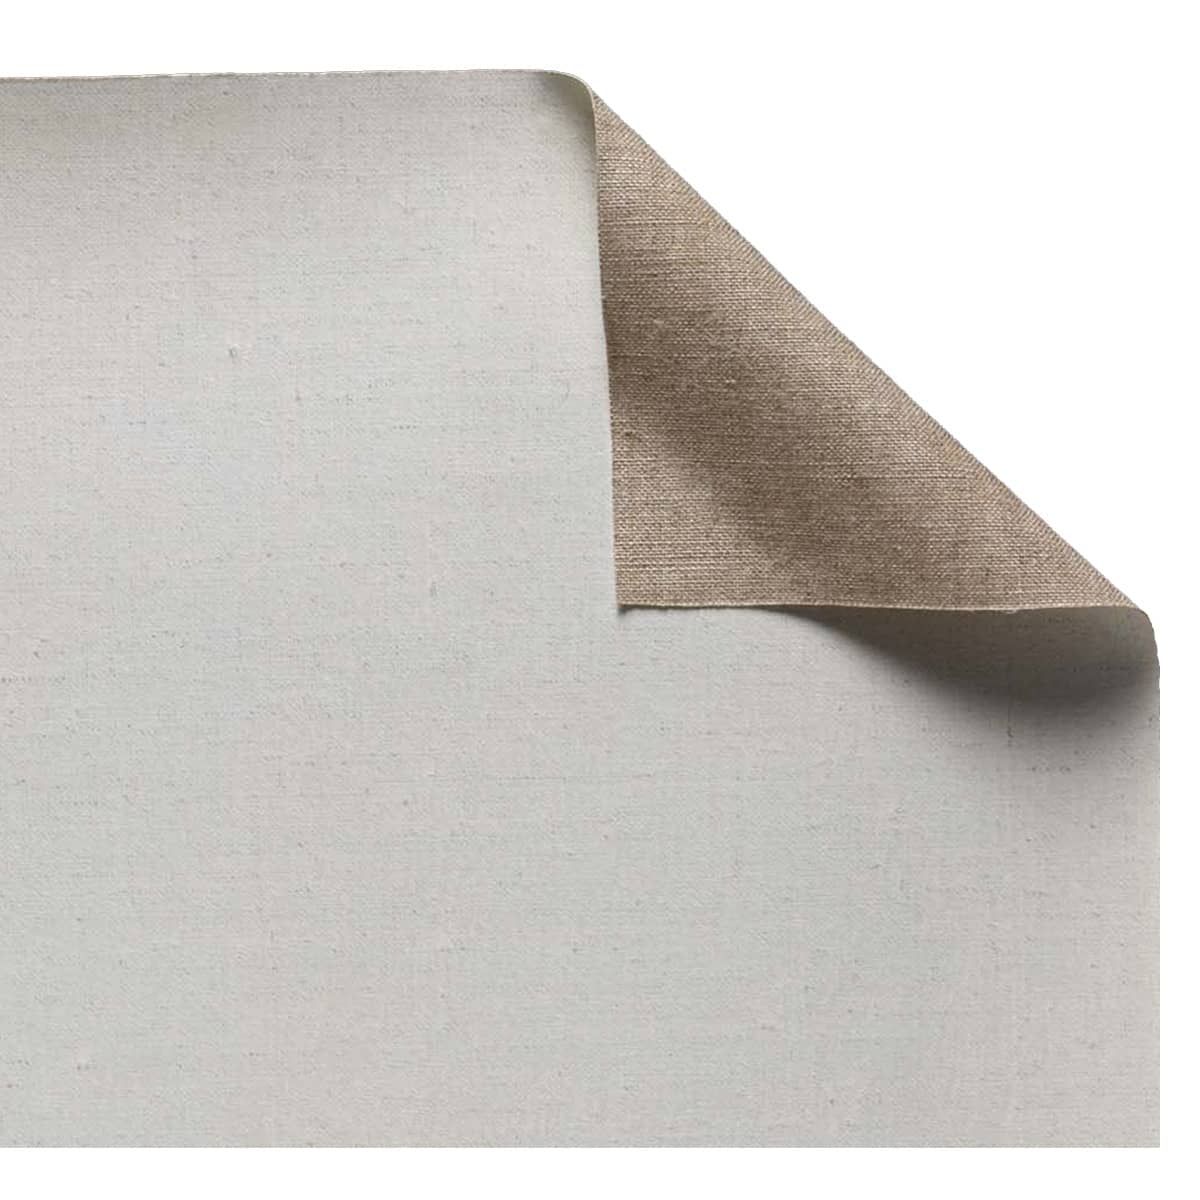 Claessens Quadruple OP Linen Roll #13 Very Fine, Warp 23cm/23cm weft; weighs 11.36oz.